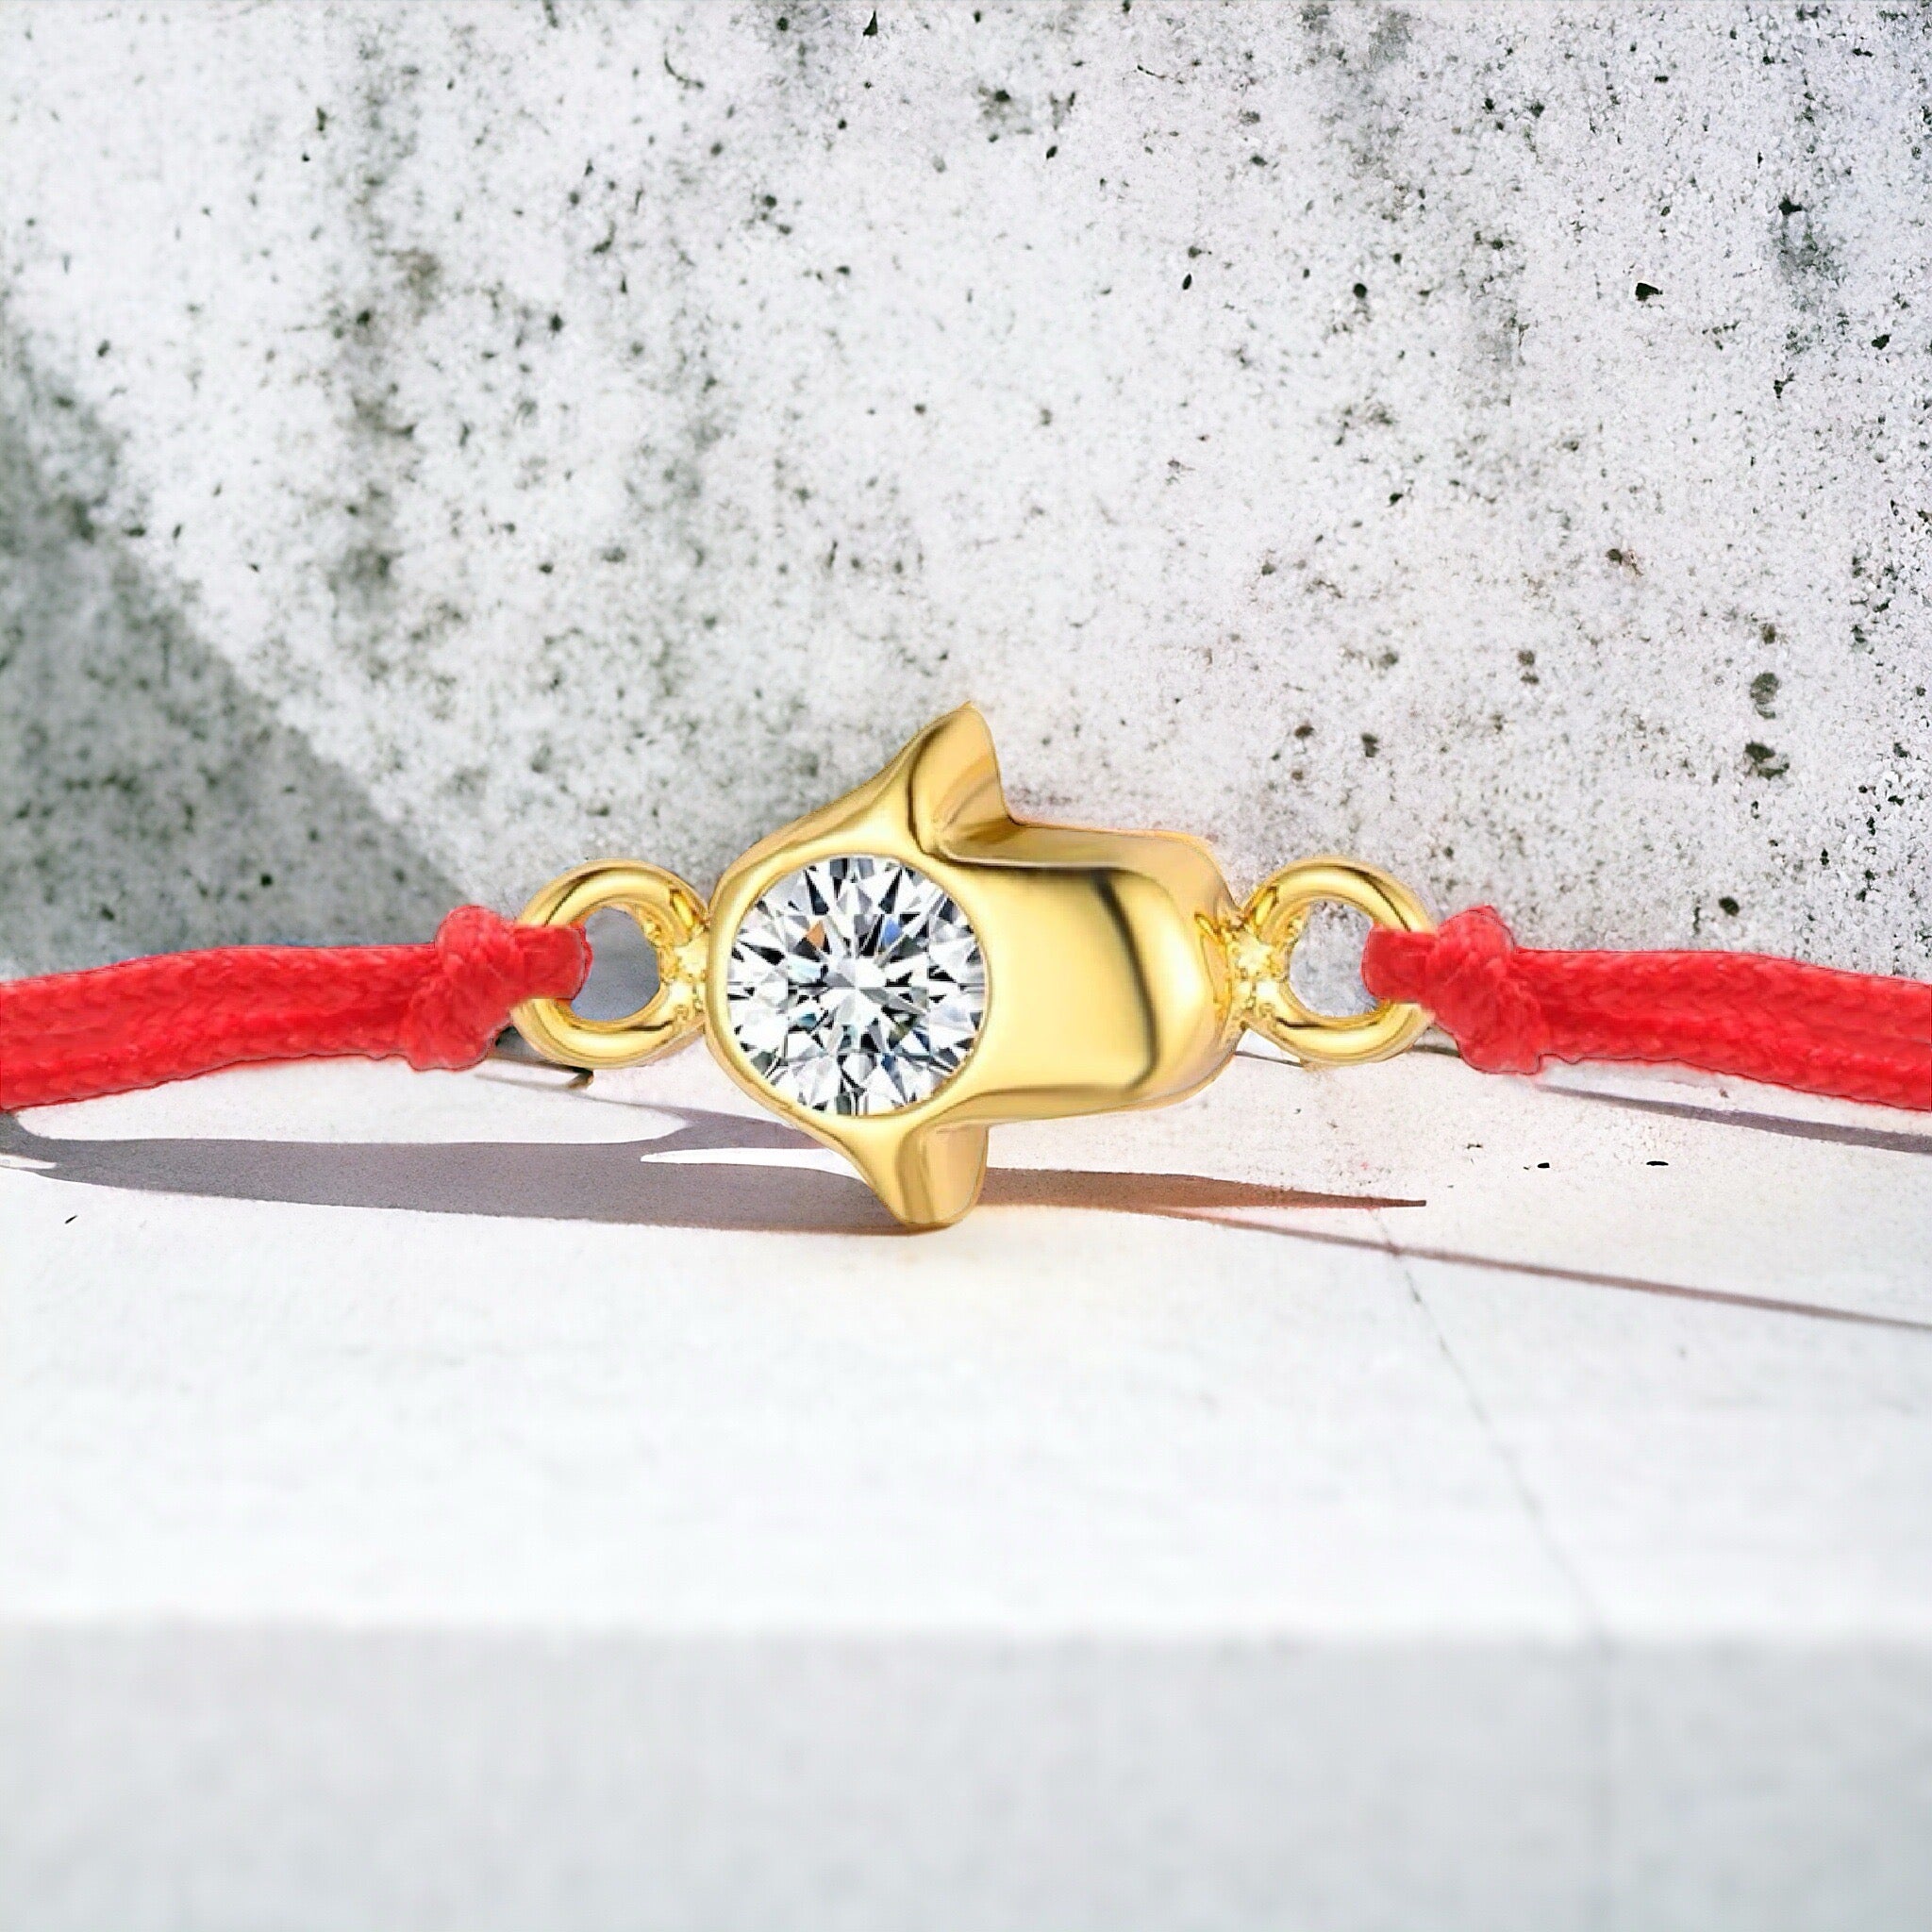 Little Gold Hamsa Red String Protection Bracelet - My Harmony Tree